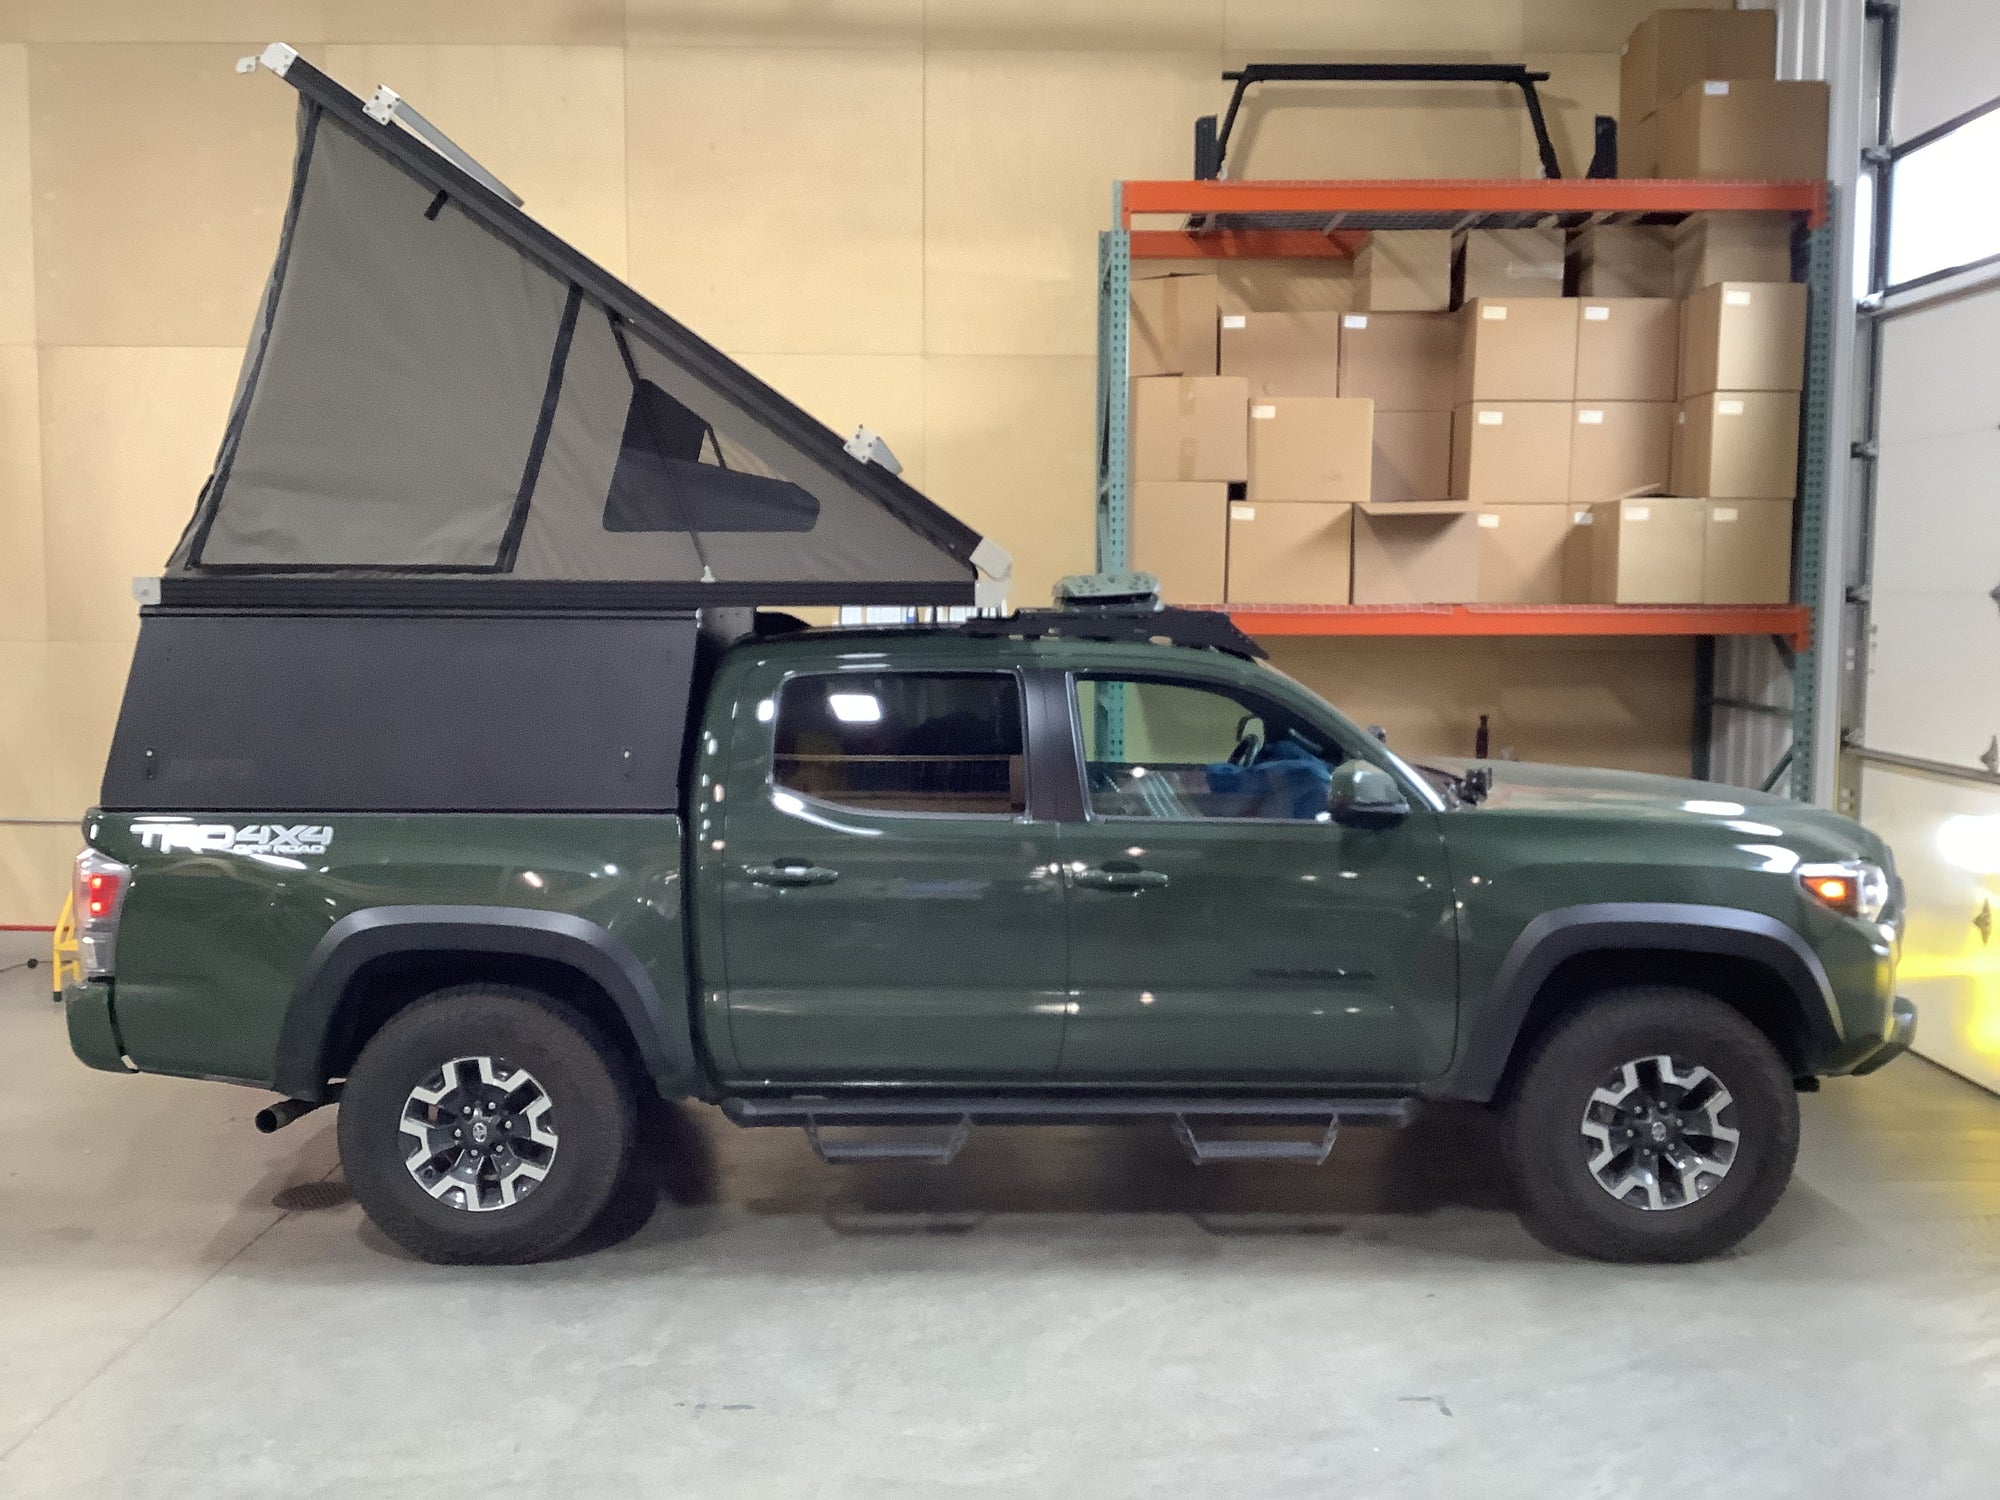 2021 Toyota Tacoma Camper - Build #4077